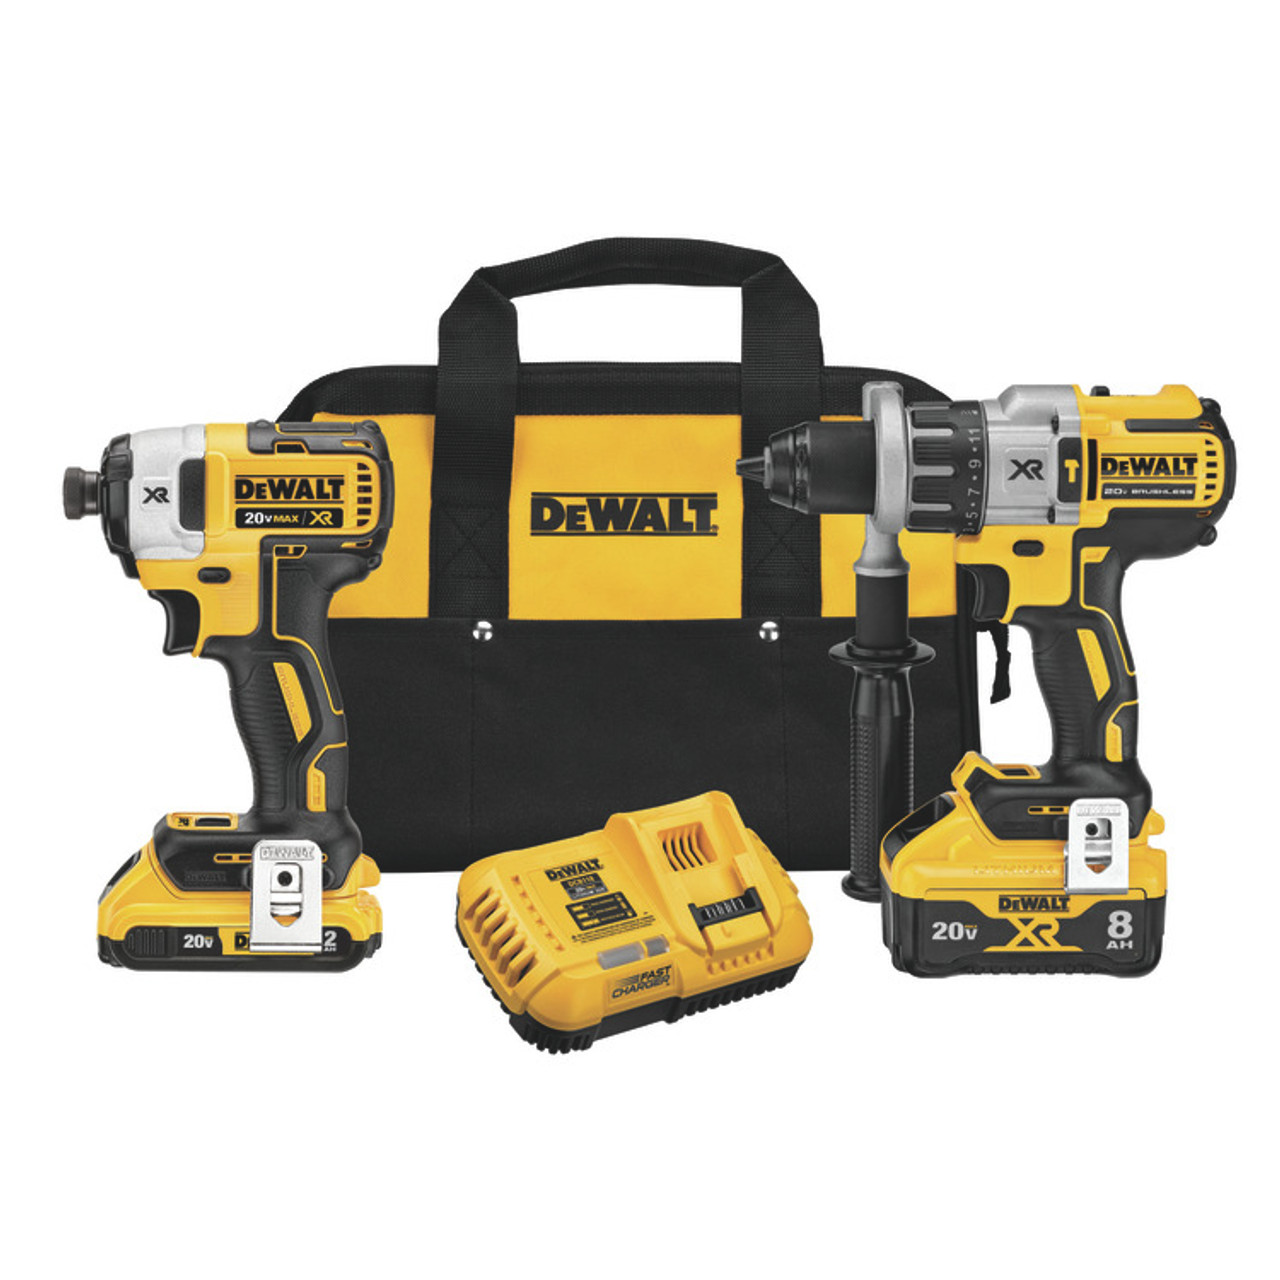 DEWALT 20V MAX* XR Reciprocating Saw Kit, Power Detect Tool Technology (DCS368W1) - 2